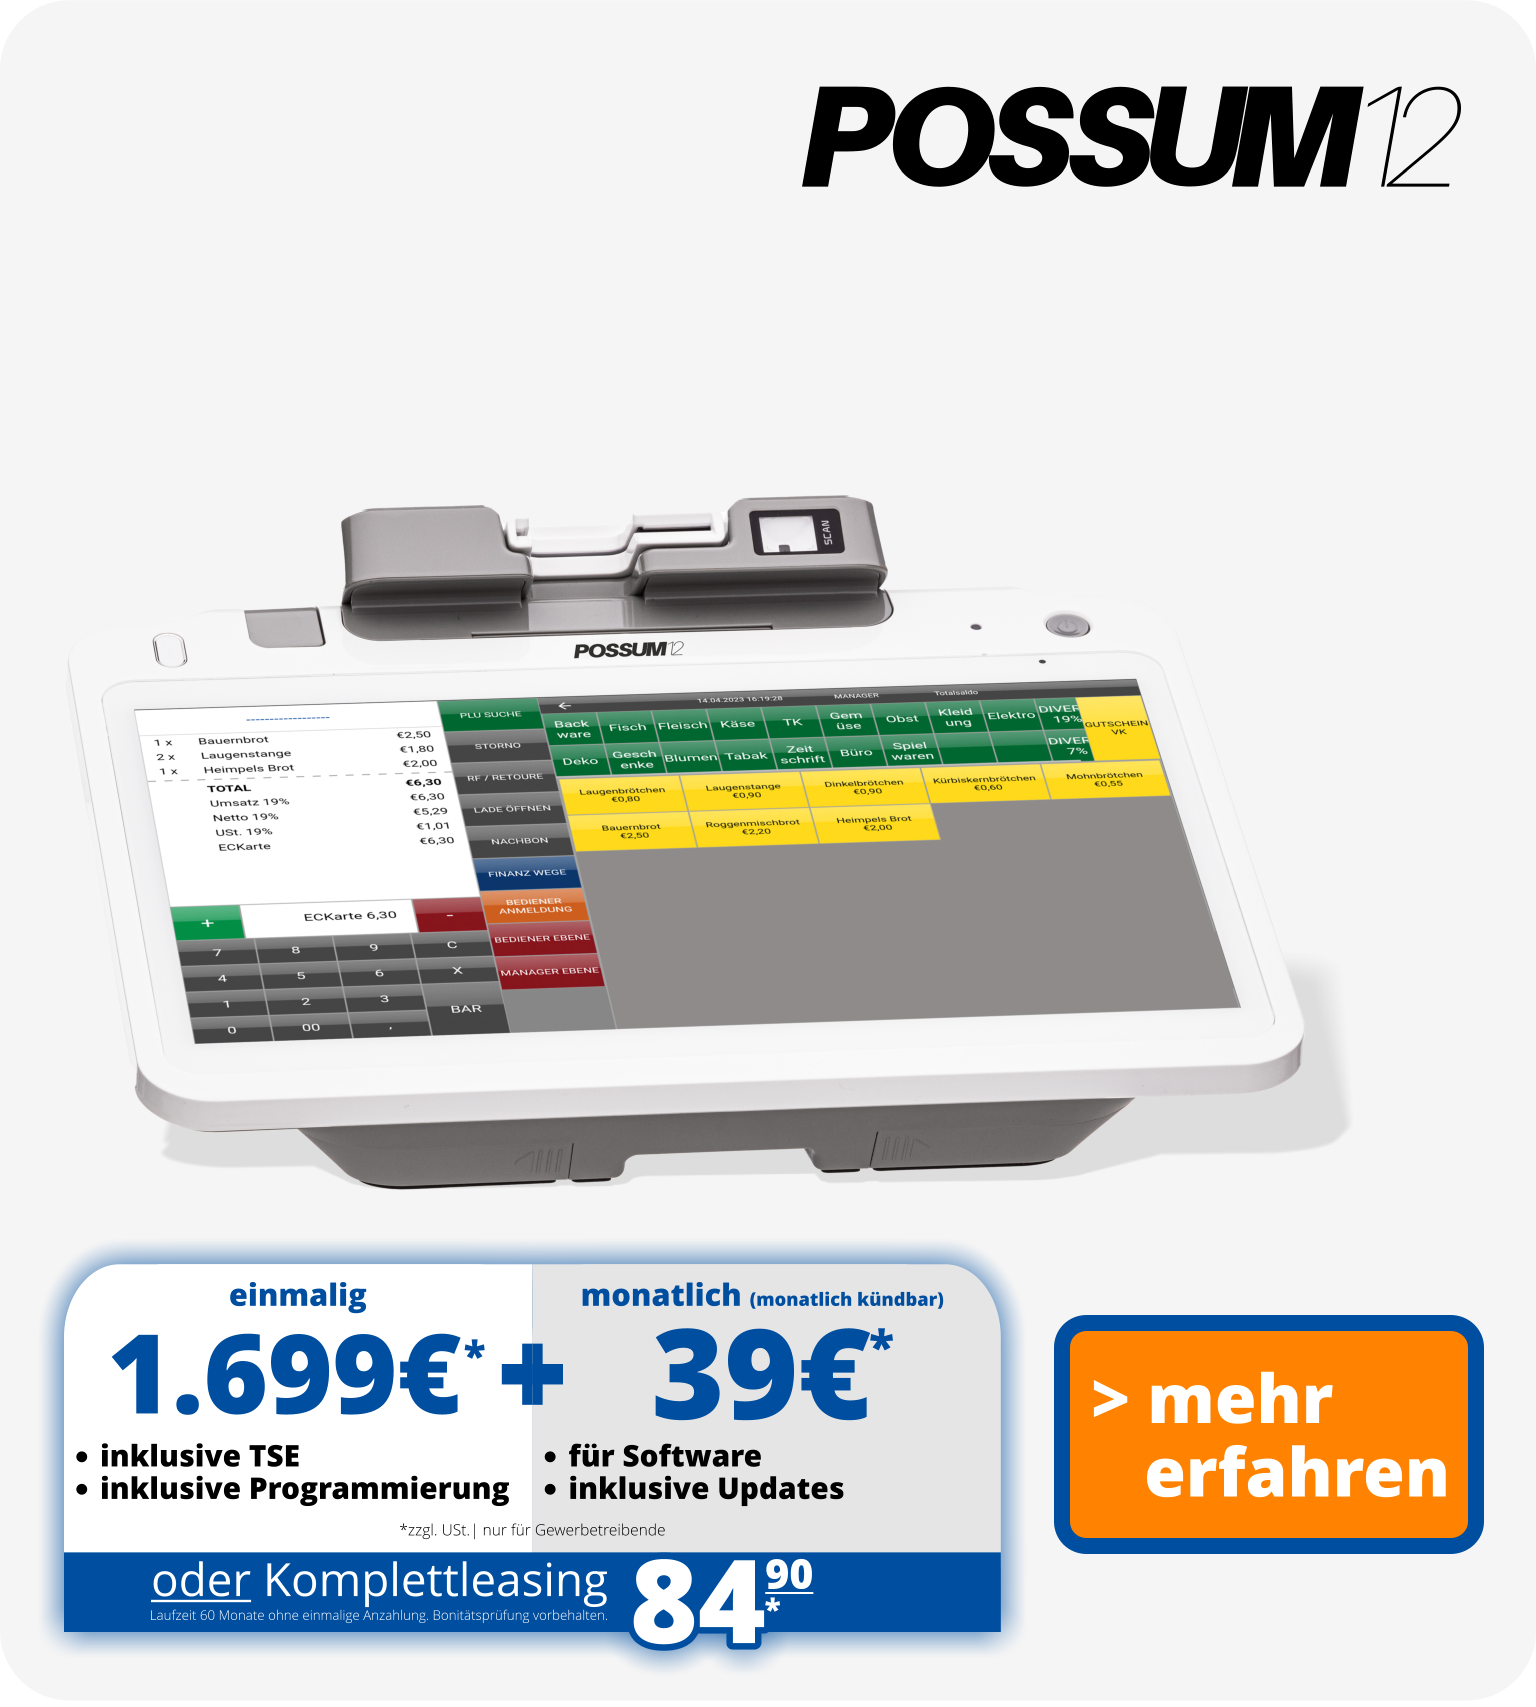 POSSUM12 Preis